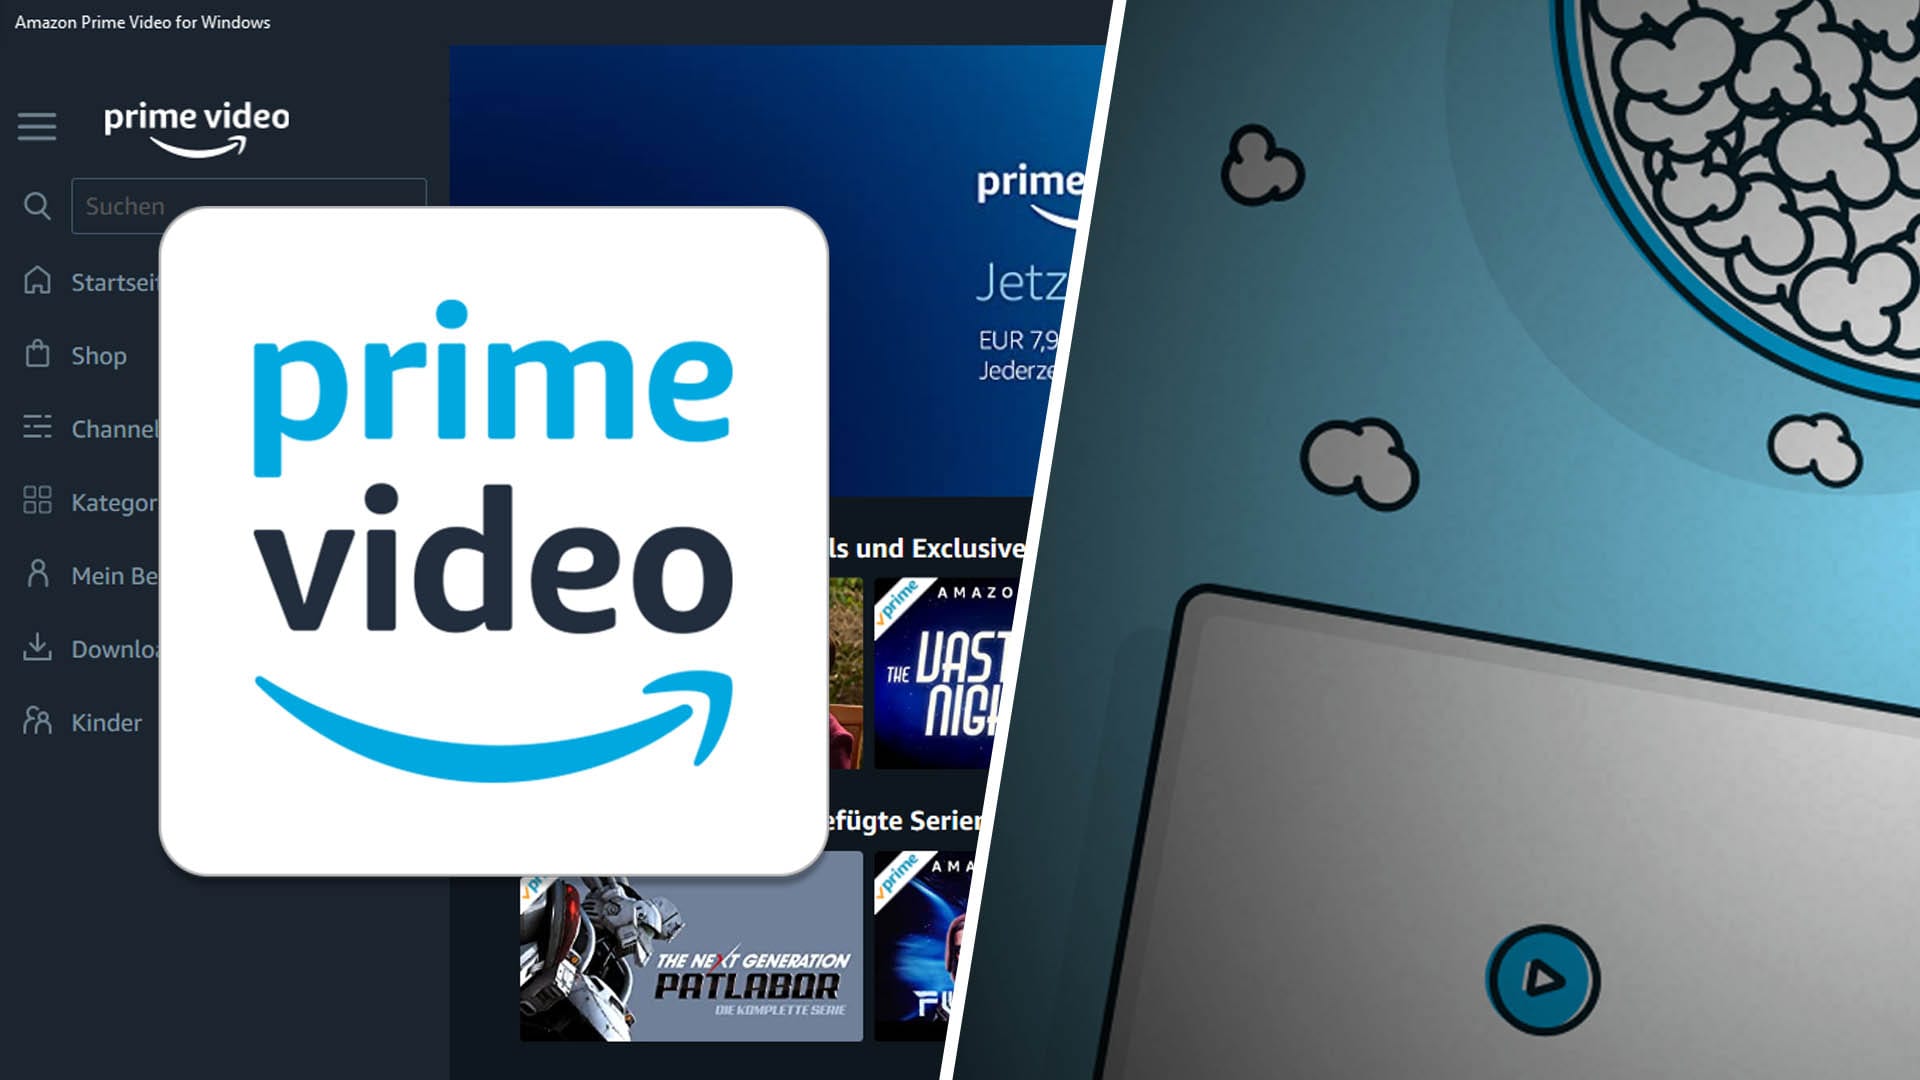 amazon prime video free download for windows 10